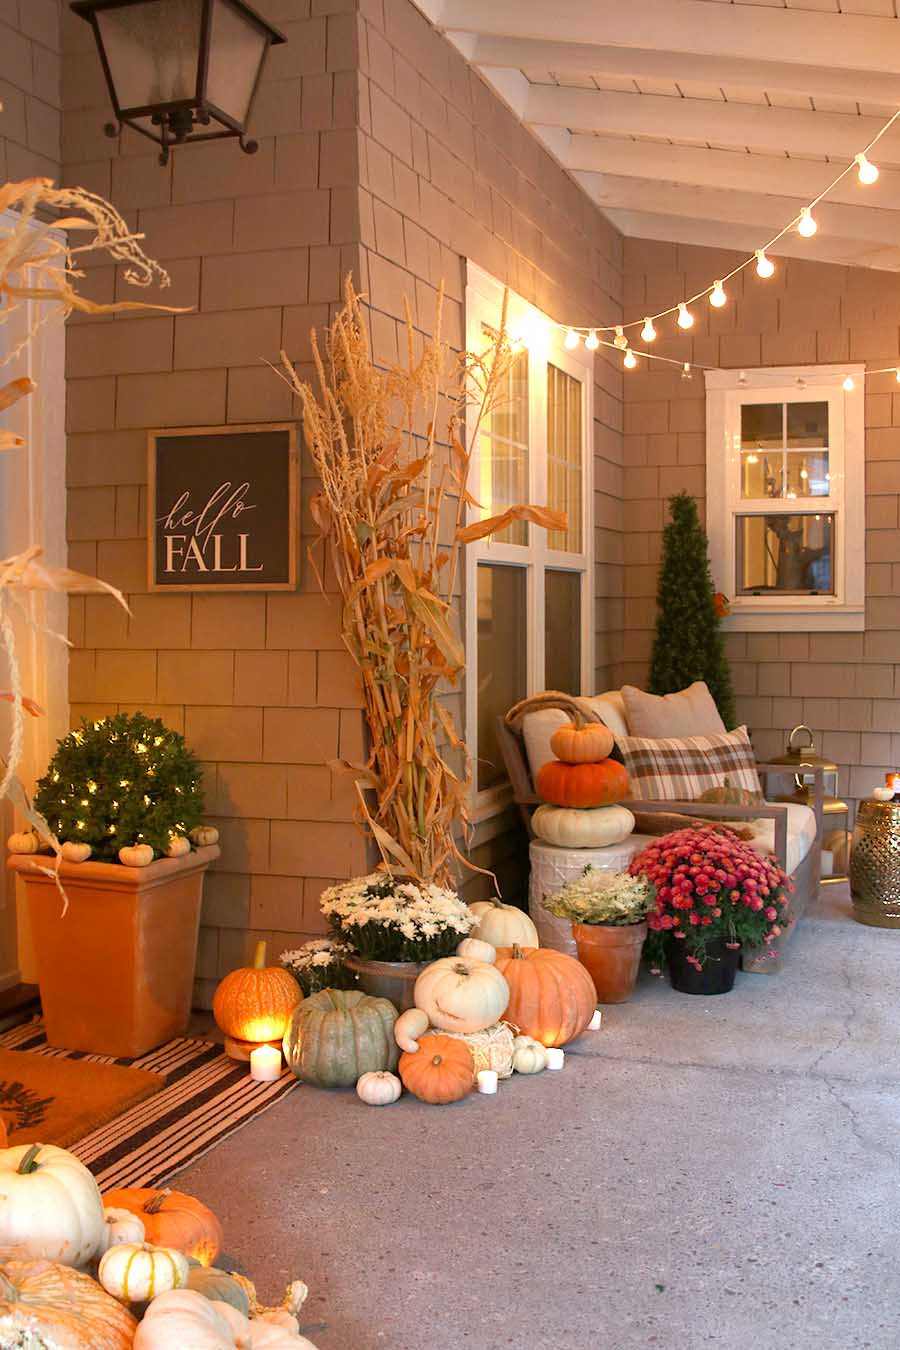 Fall Porch Decor
 Neutral Fall Porch Decor with Pumpkins and Cornstalks